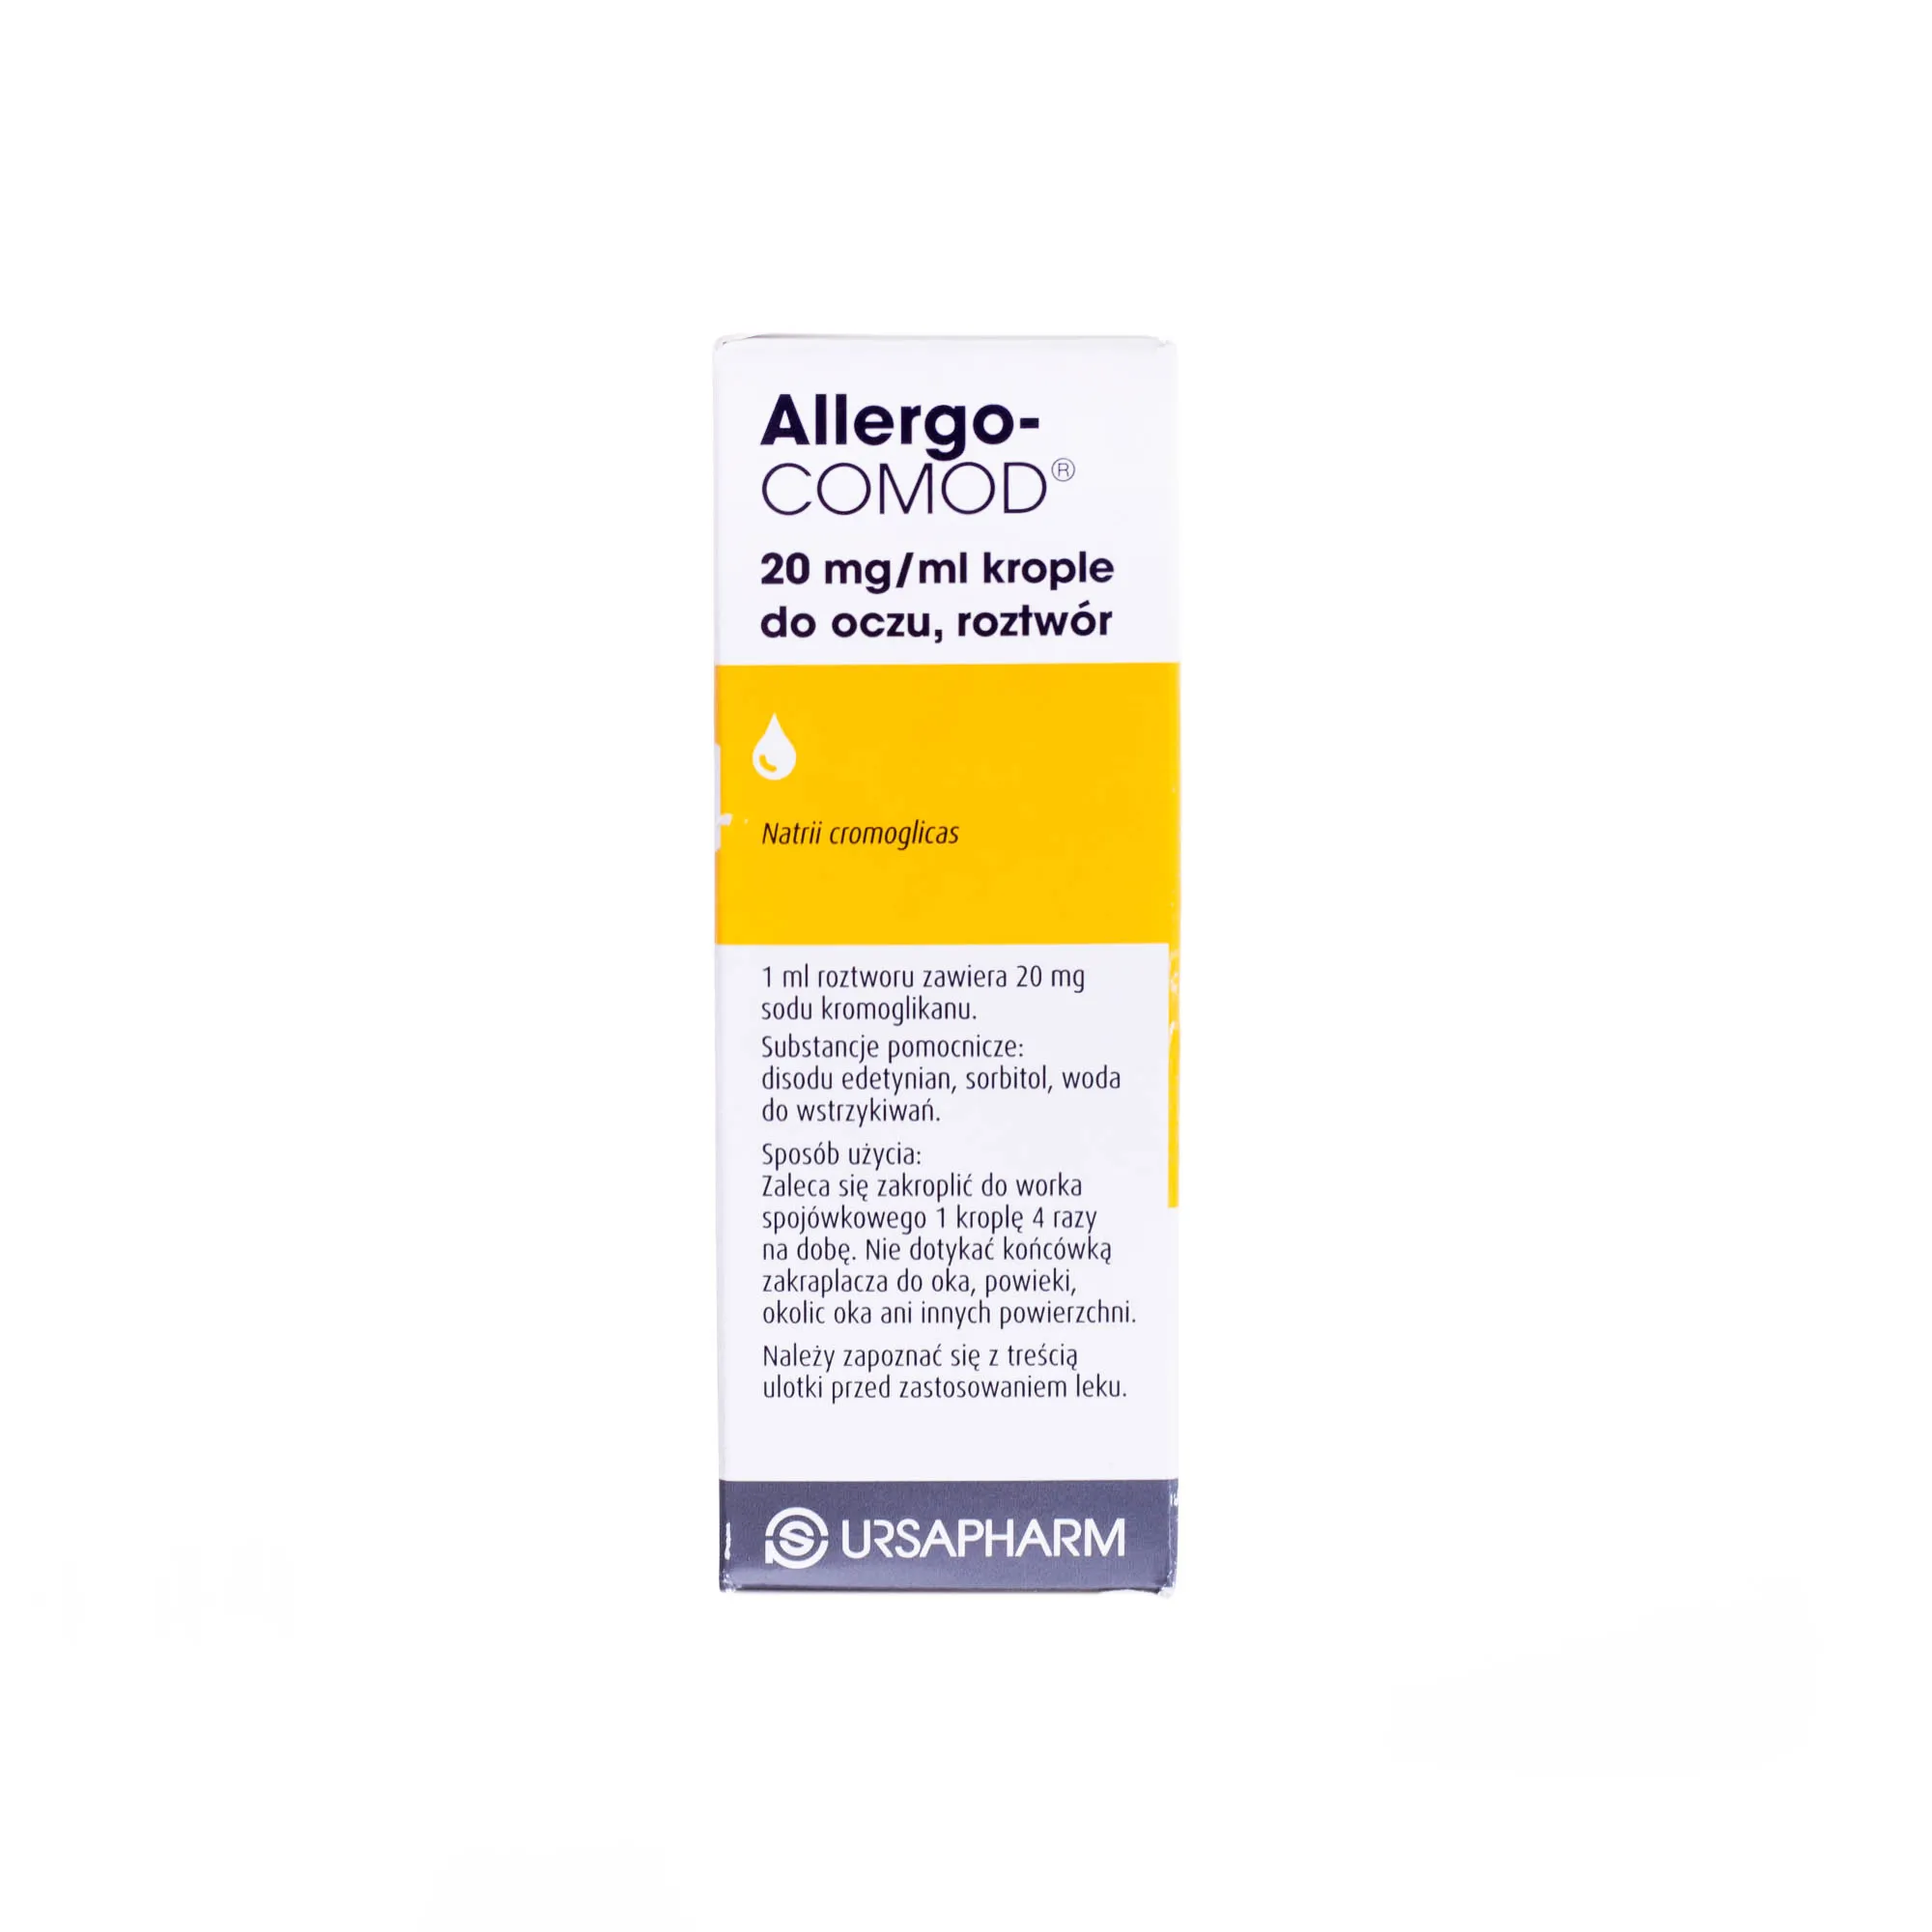 Allergo-COMOD 20 mg/ml krople do oczu, roztwór, 10 ml 